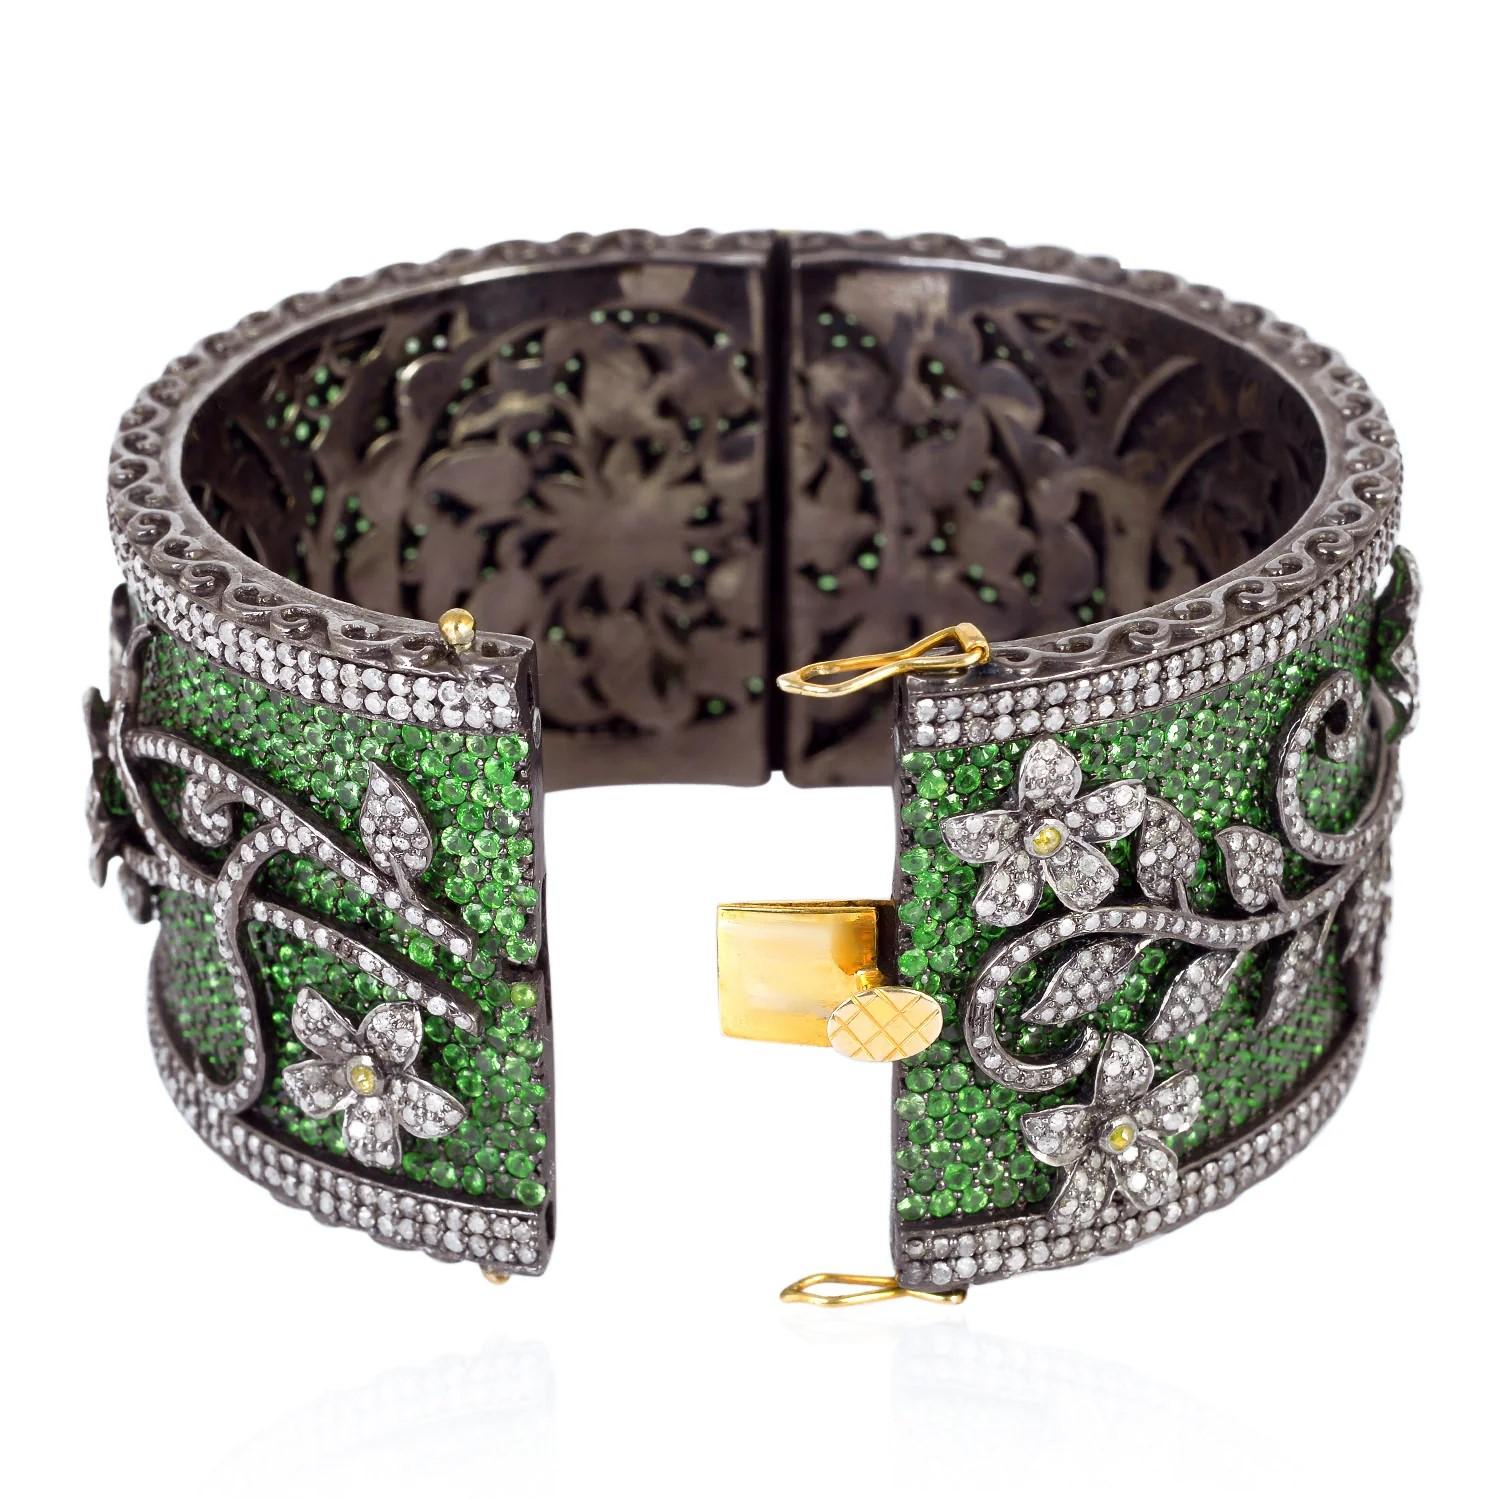 Mixed Cut Meghna Jewels Floral Antique Style 51.84 carats Tsavorite Diamond Bracelet Cuff